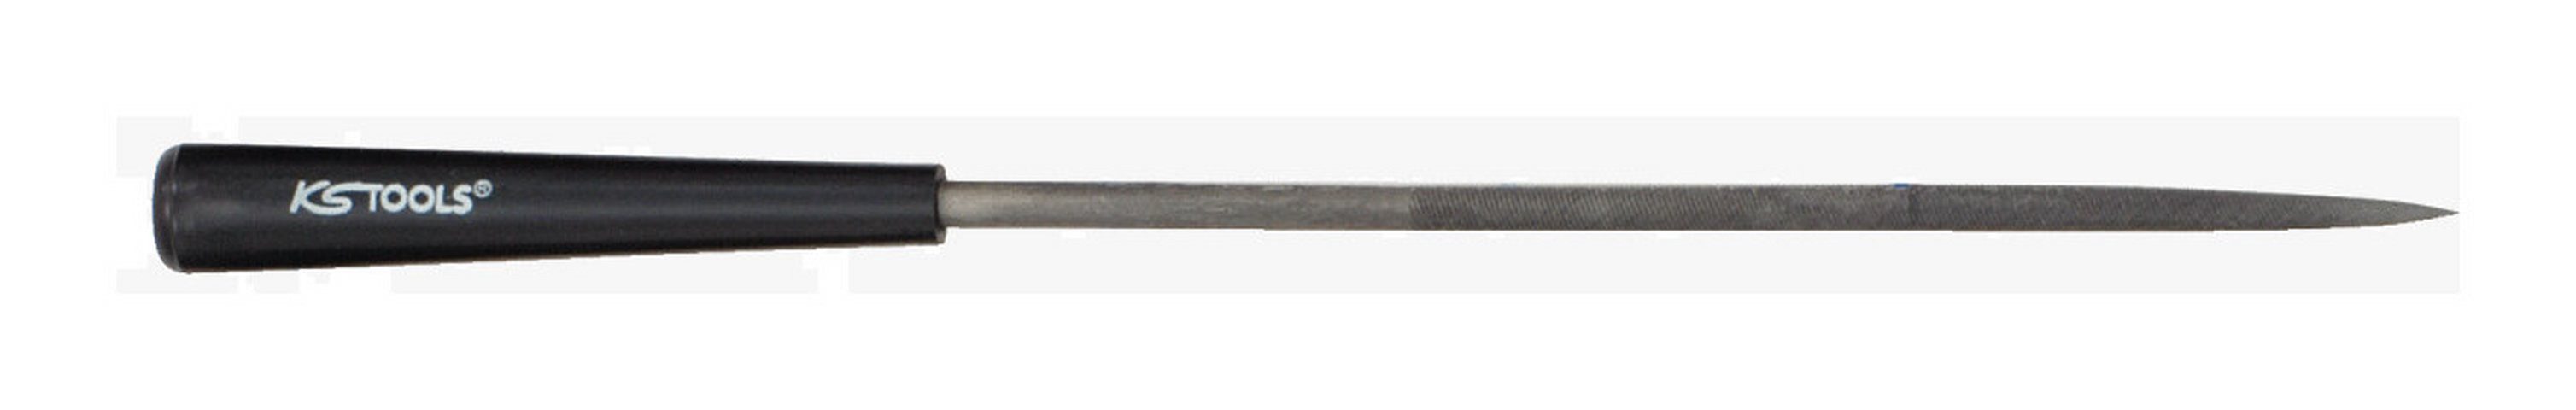 KS Tools Feile, Rund-Nadelfeile, 3 mm